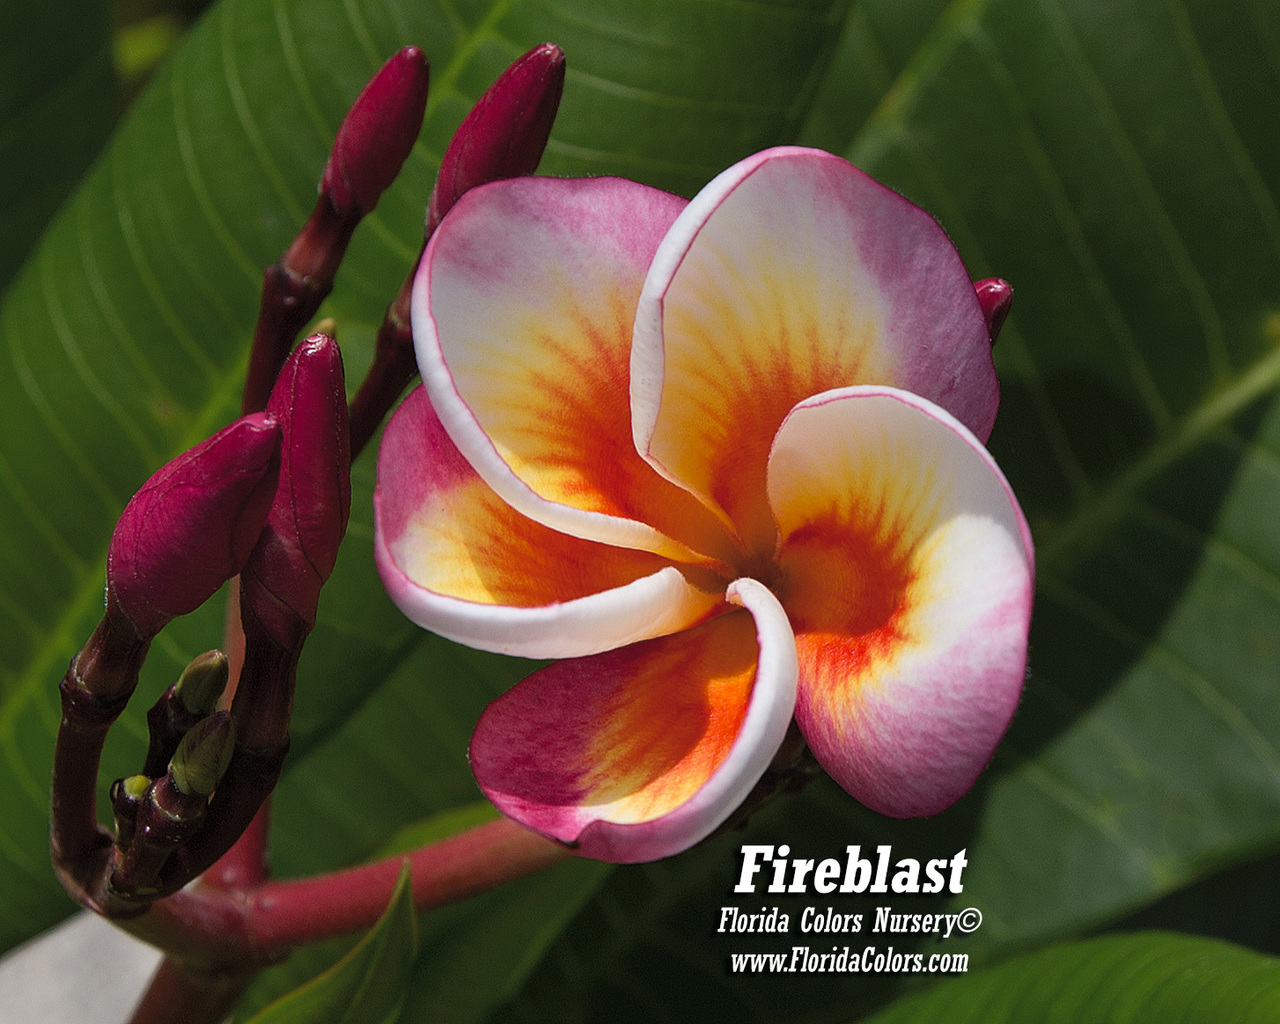 Fireblast Plumeria Availability